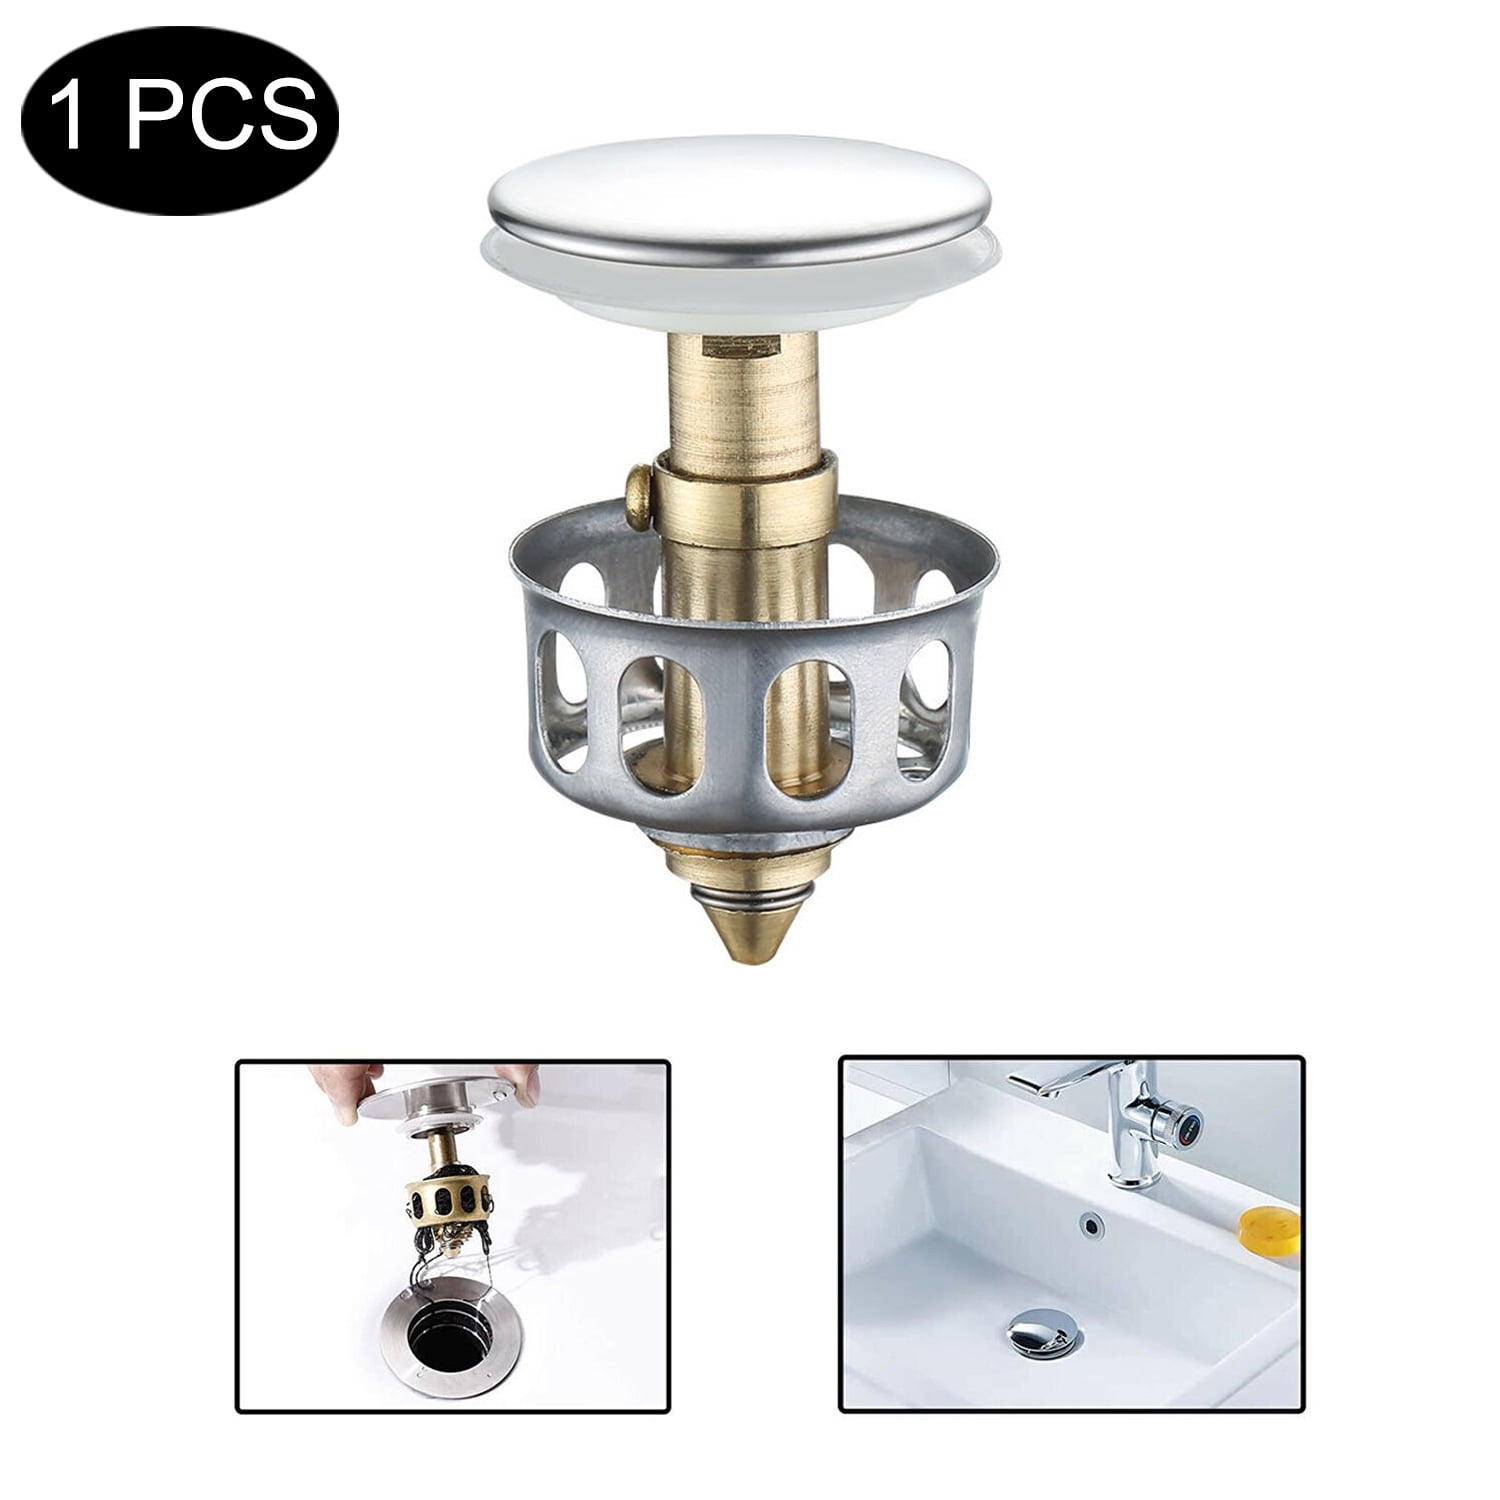 Details about   Universal Wash Basin Core Bounce Drain Filter Pop Up Bathroom Sink Plug US 